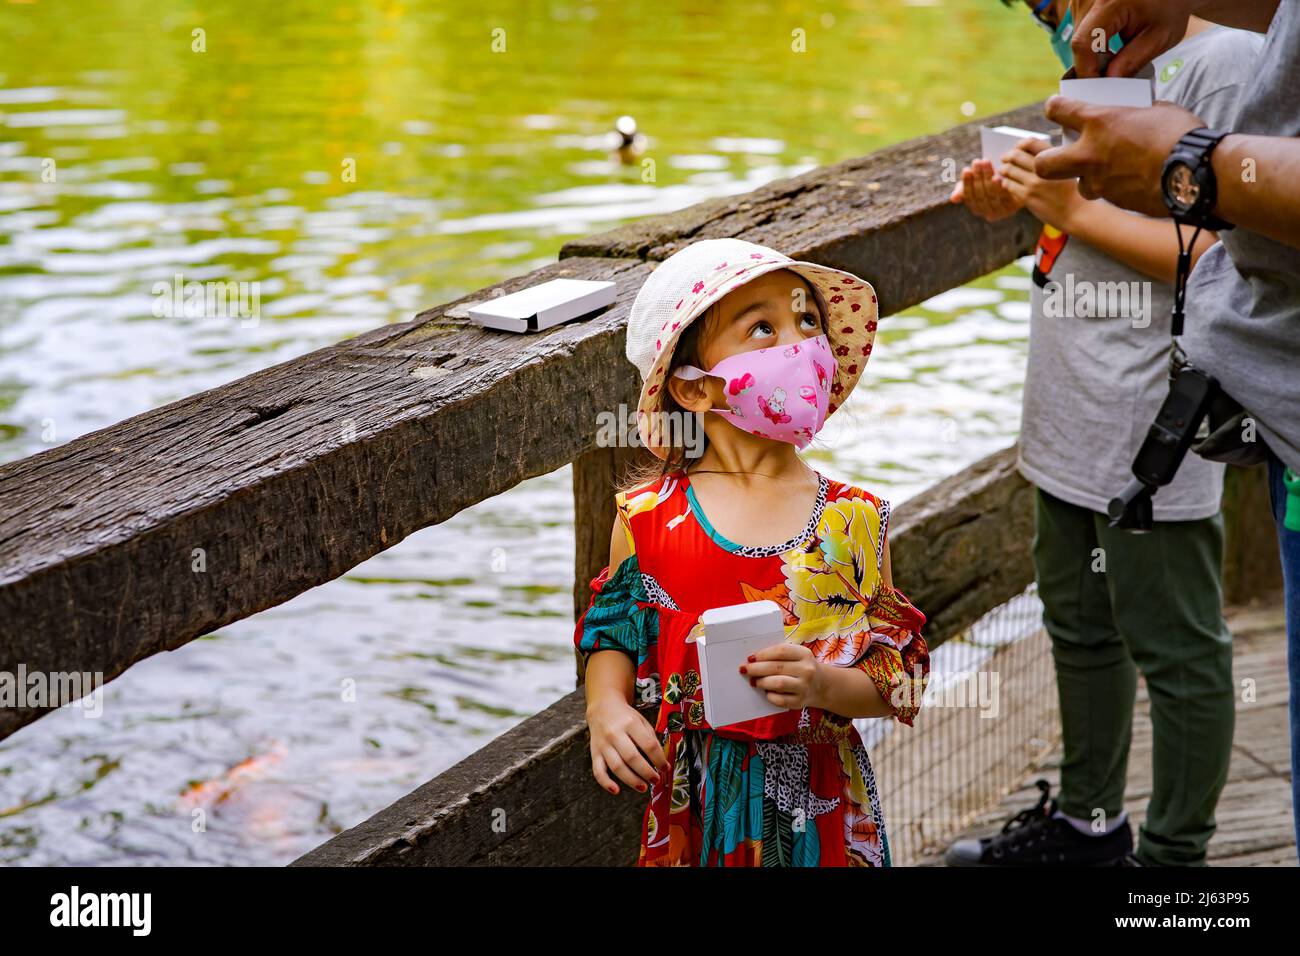 Fantasia bambina indossare maschera viso al lago Foto stock - Alamy